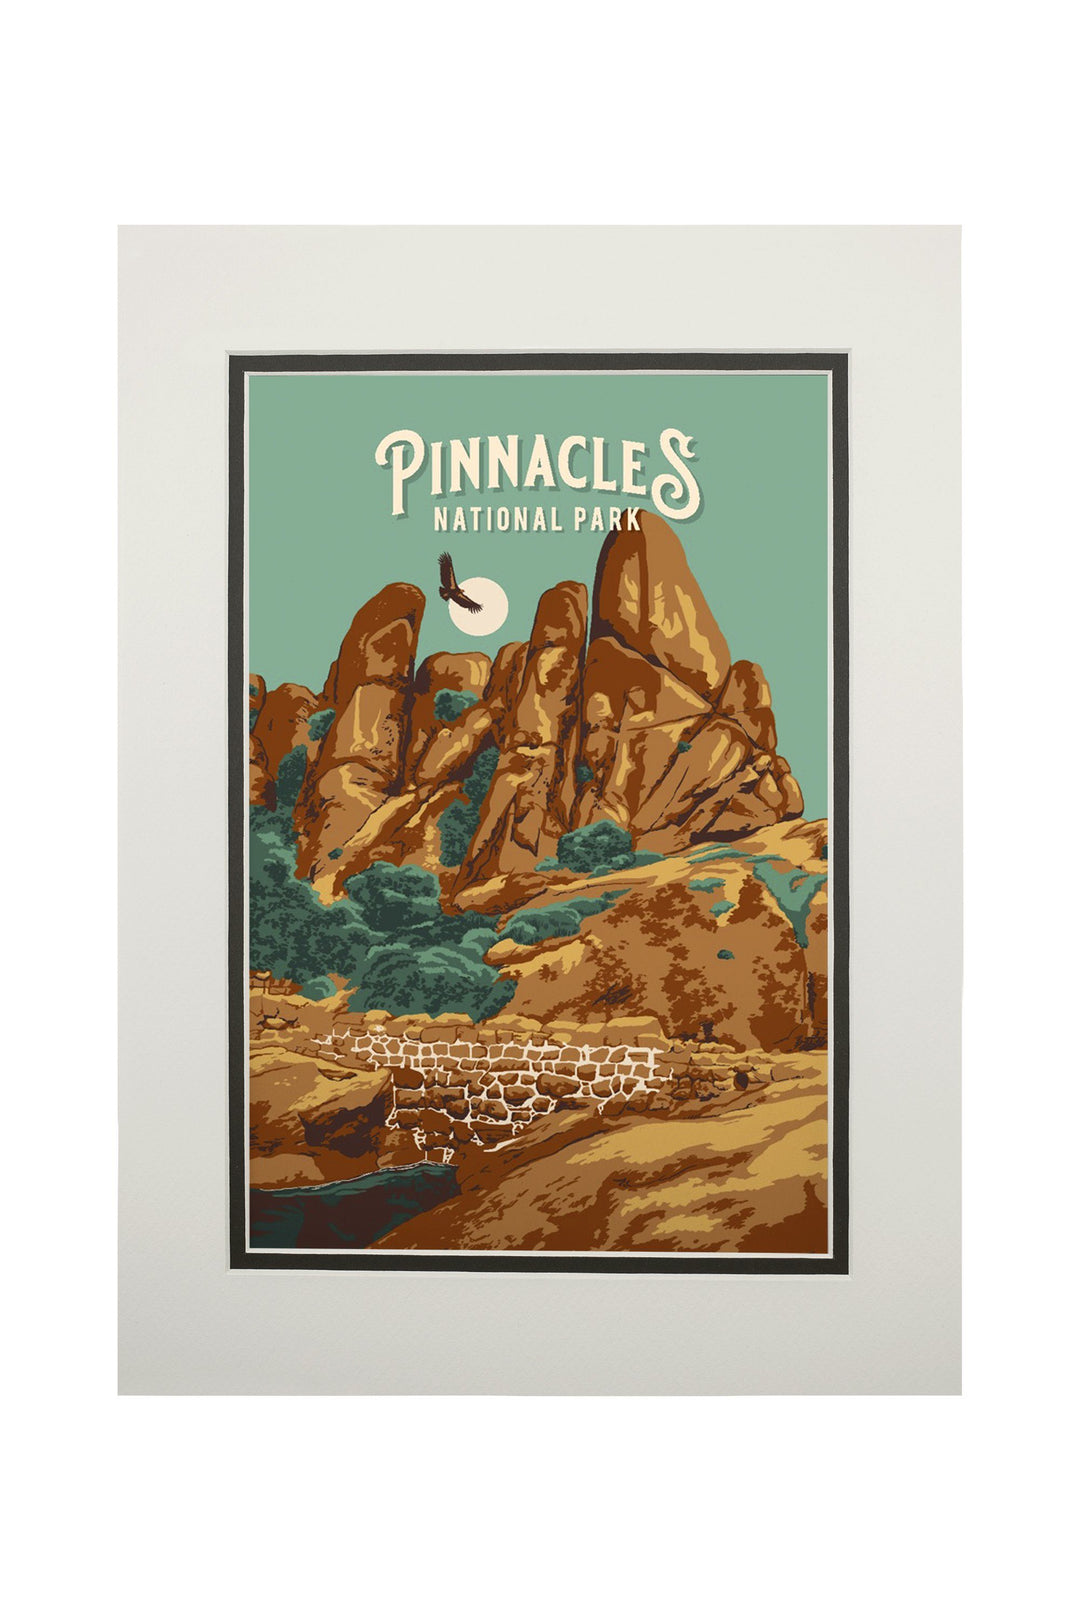 Pinnacles National Park, California, Painterly National Park Series, Art Prints and Metal Signs Art Lantern Press 11 x 14 Matted Art Print 